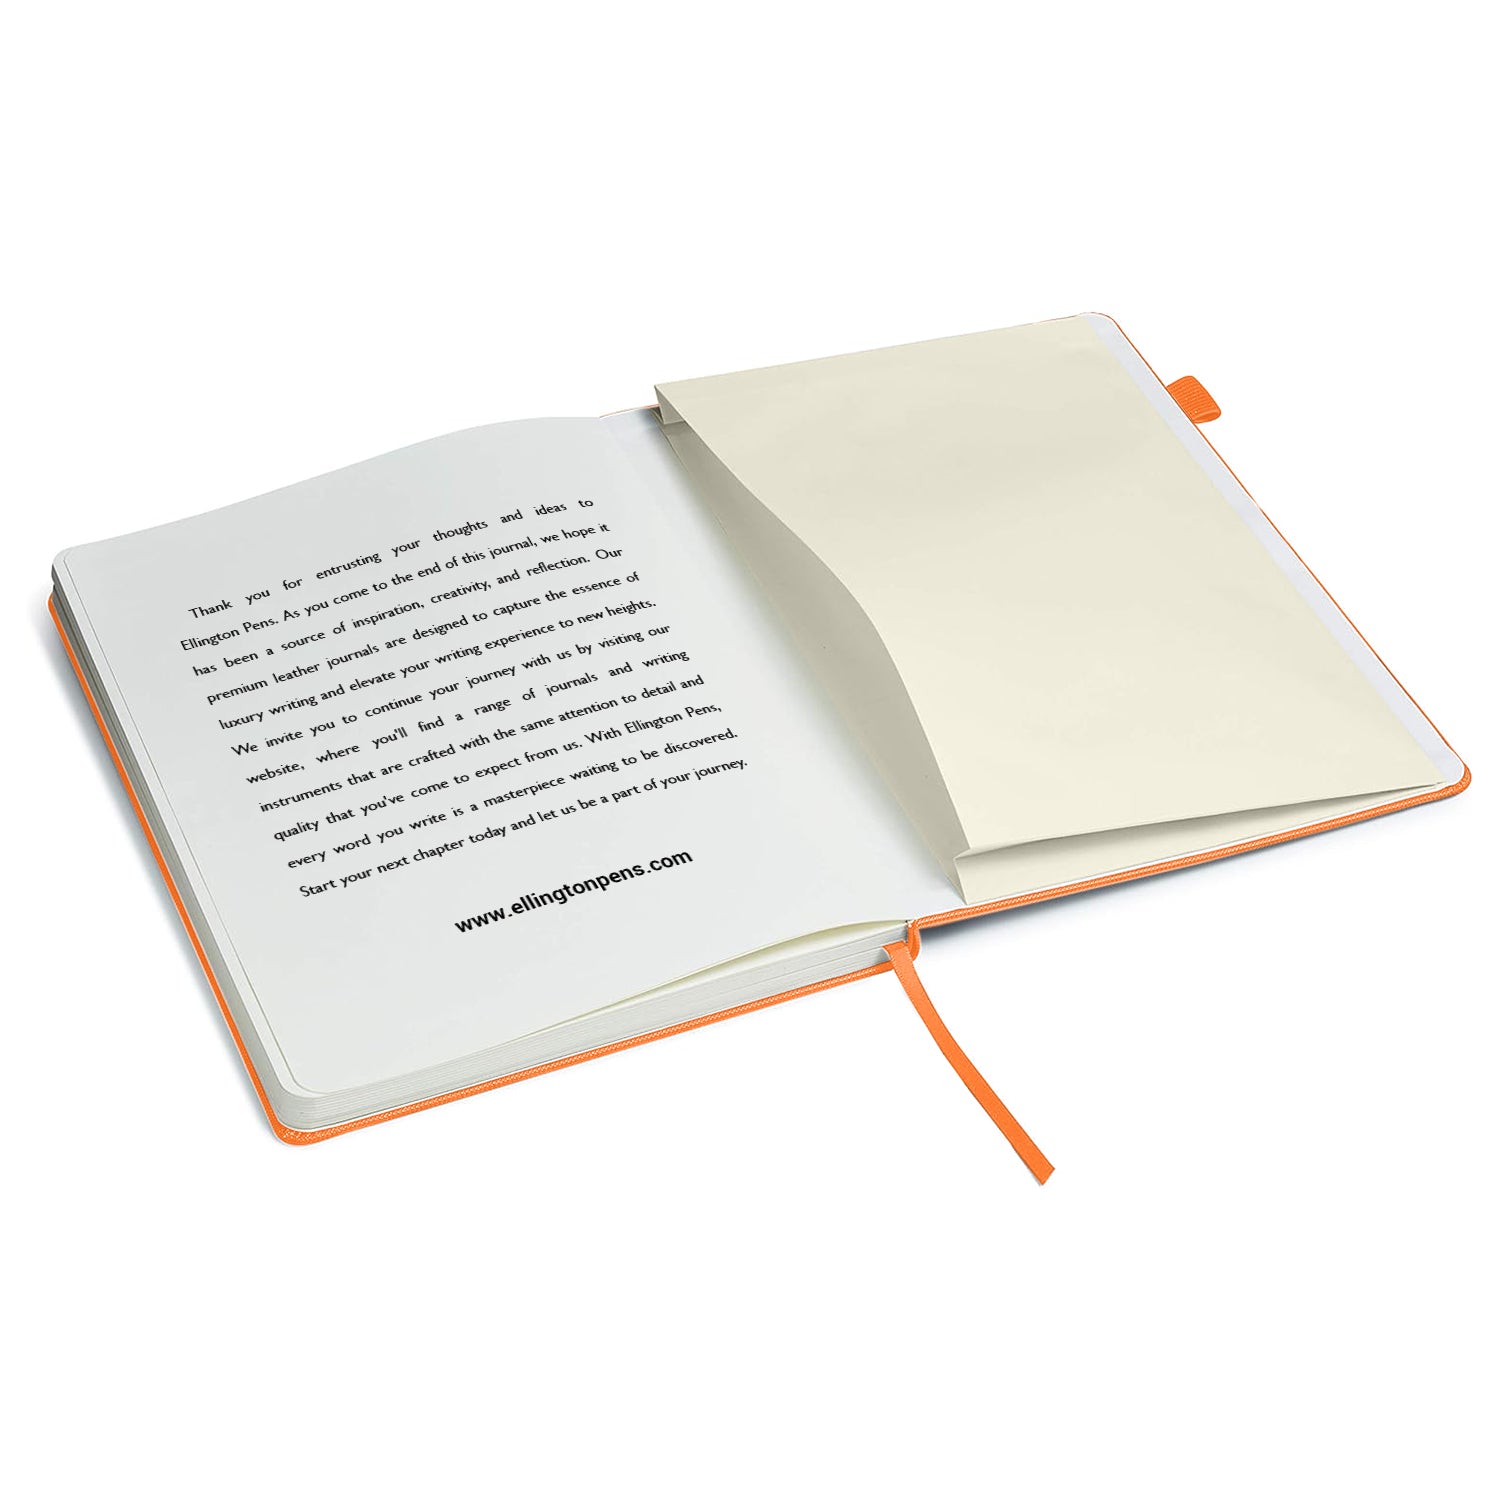 Orange Journal - PU Saffiano Leather journal